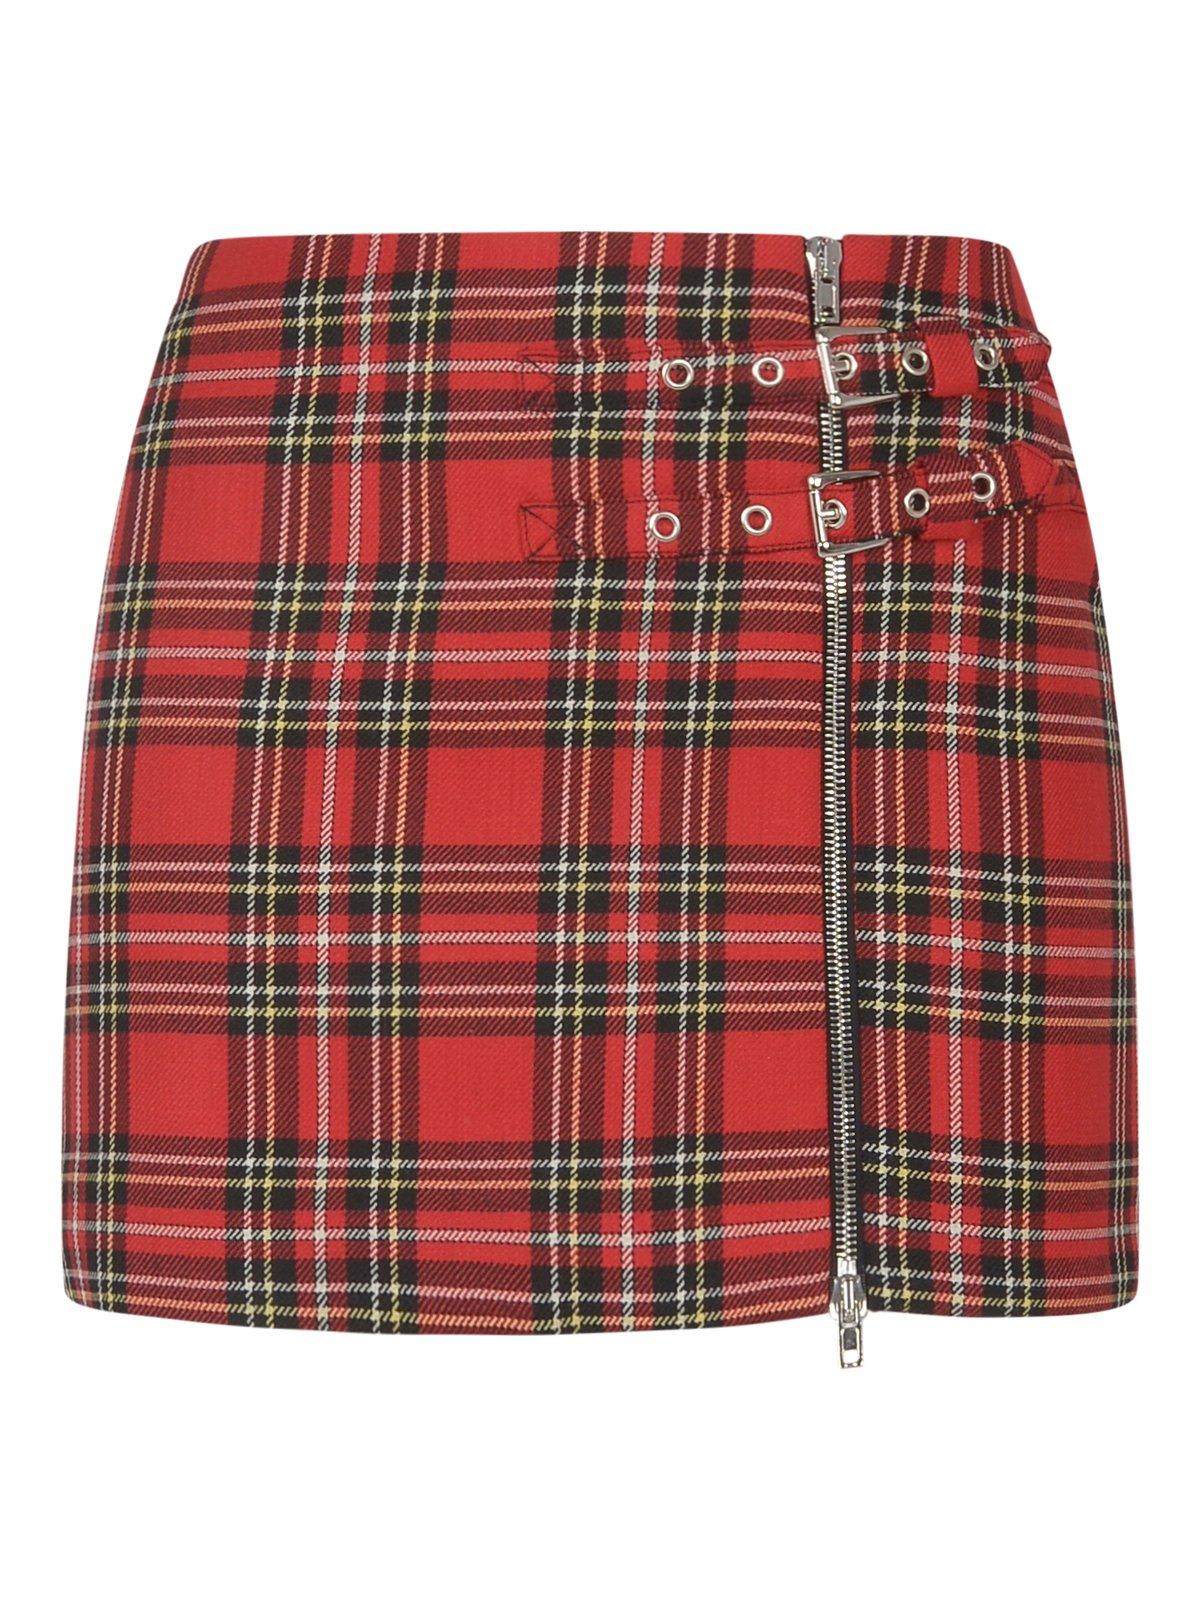 Plaid-check Patterned Side-zipped Mini Skirt